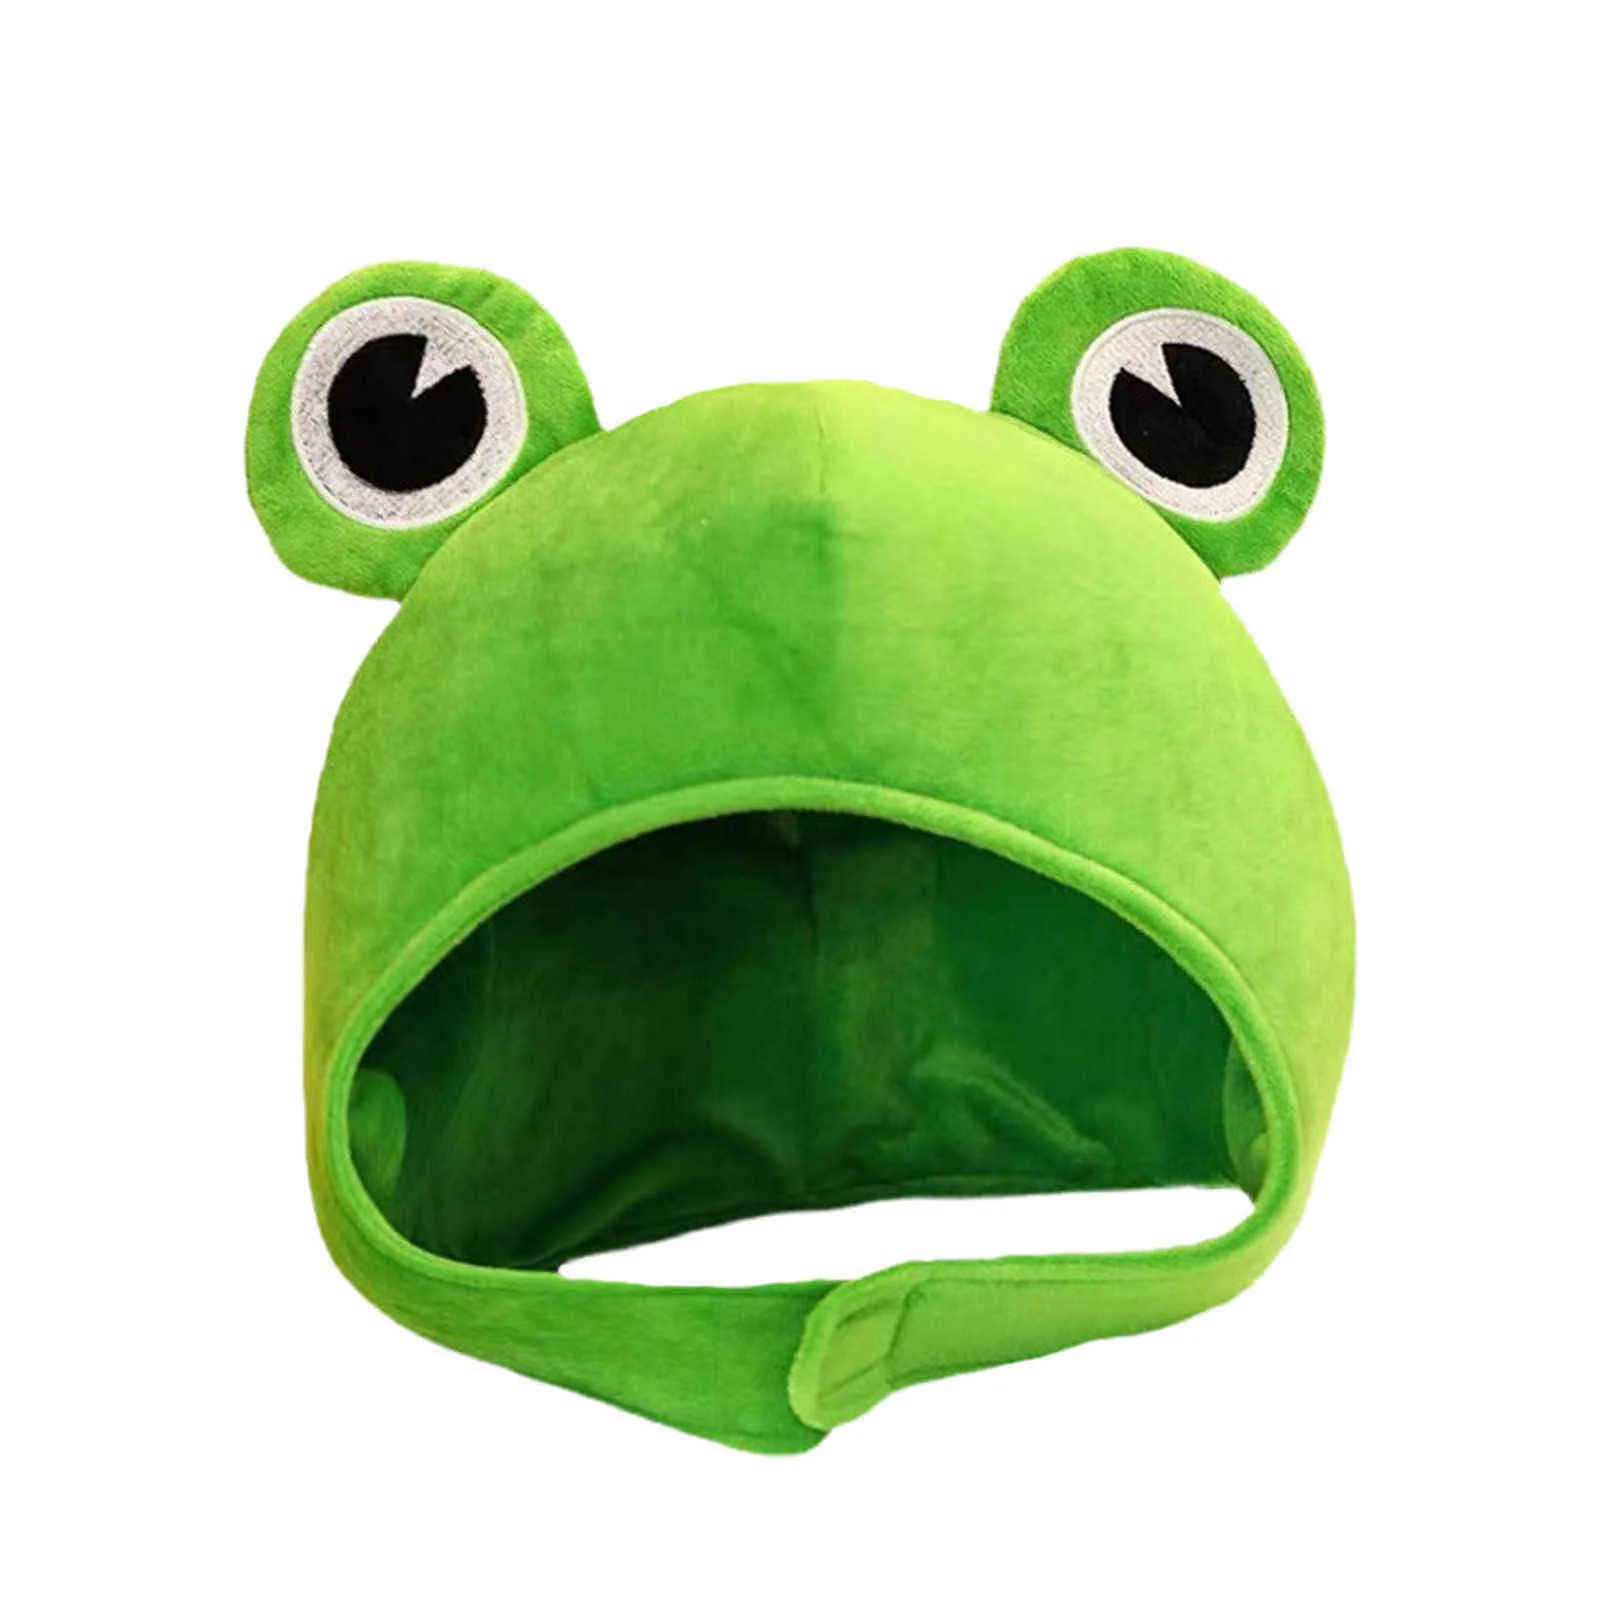 Novelty Caps Funny Big Frog Eyes Cute Cartoon Plush Hat Toy Green Full Headagear Cap Cosplay Kostym Party Dress Up Photo Prop Y21111